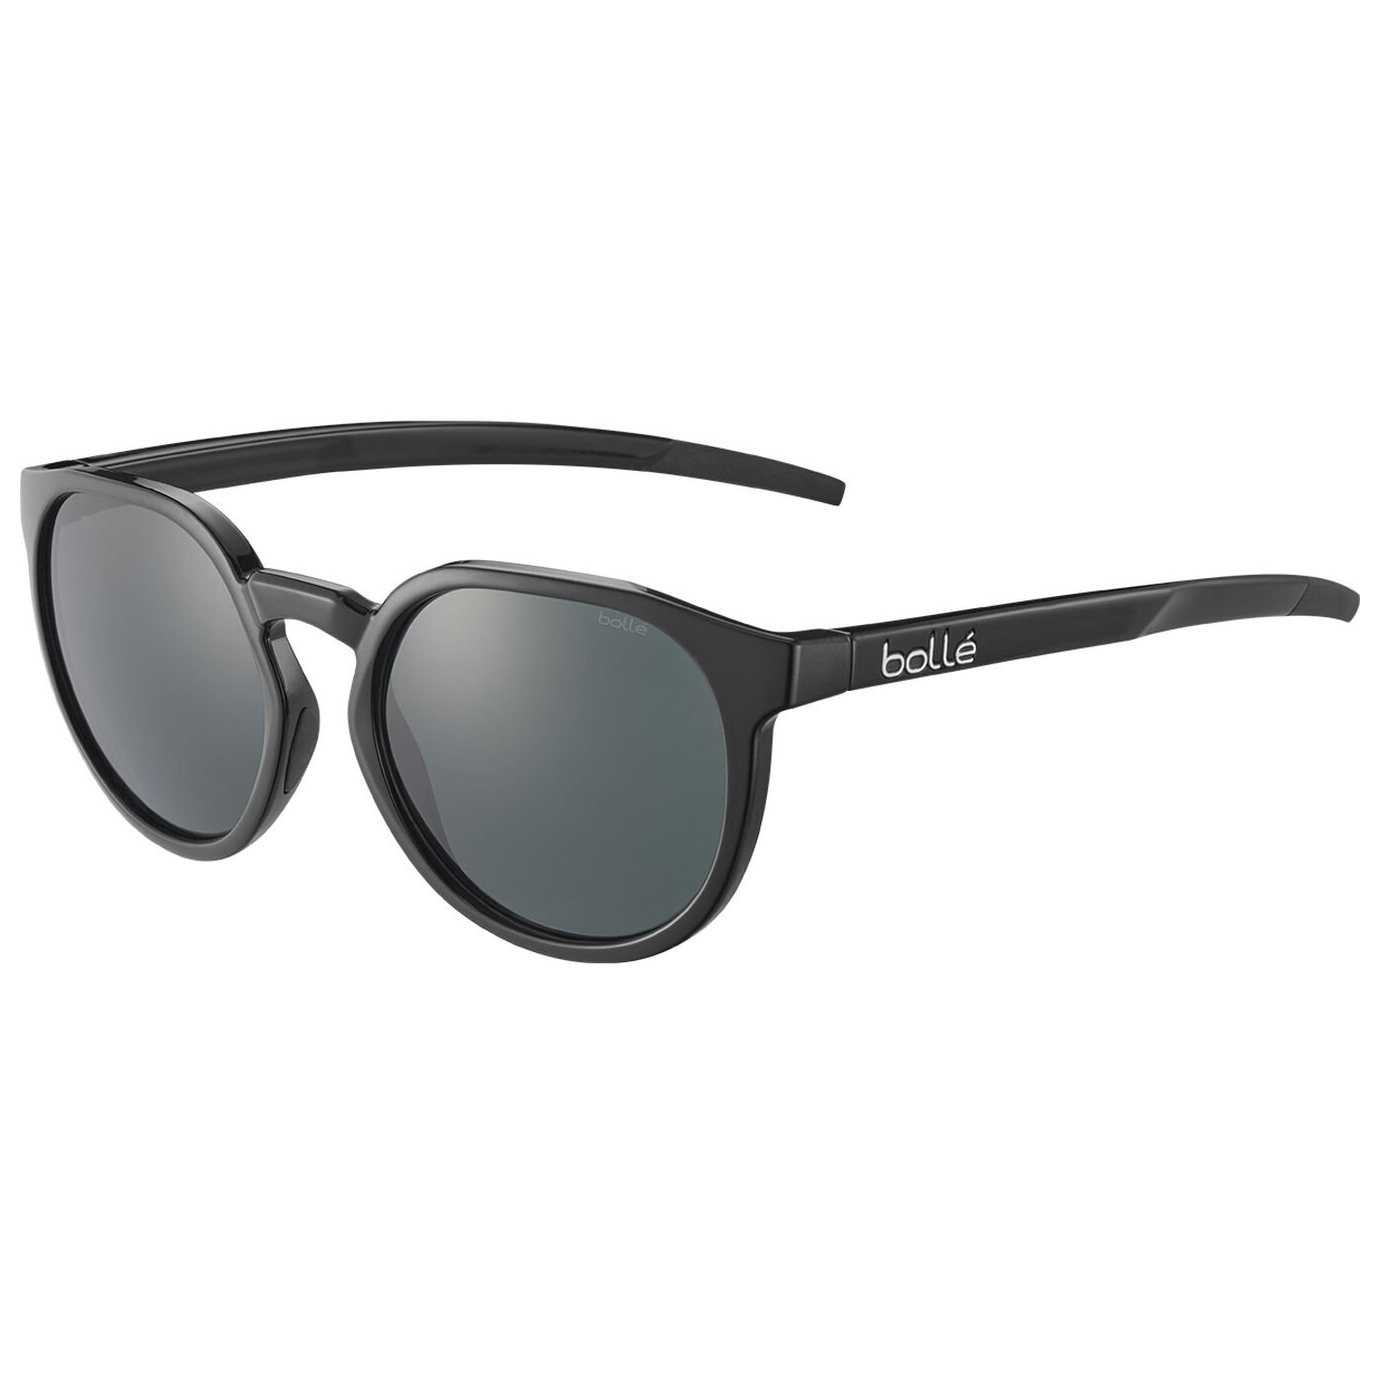 Солнцезащитные очки Bollé Merit S3 (VLT 11%), цвет Black Shiny